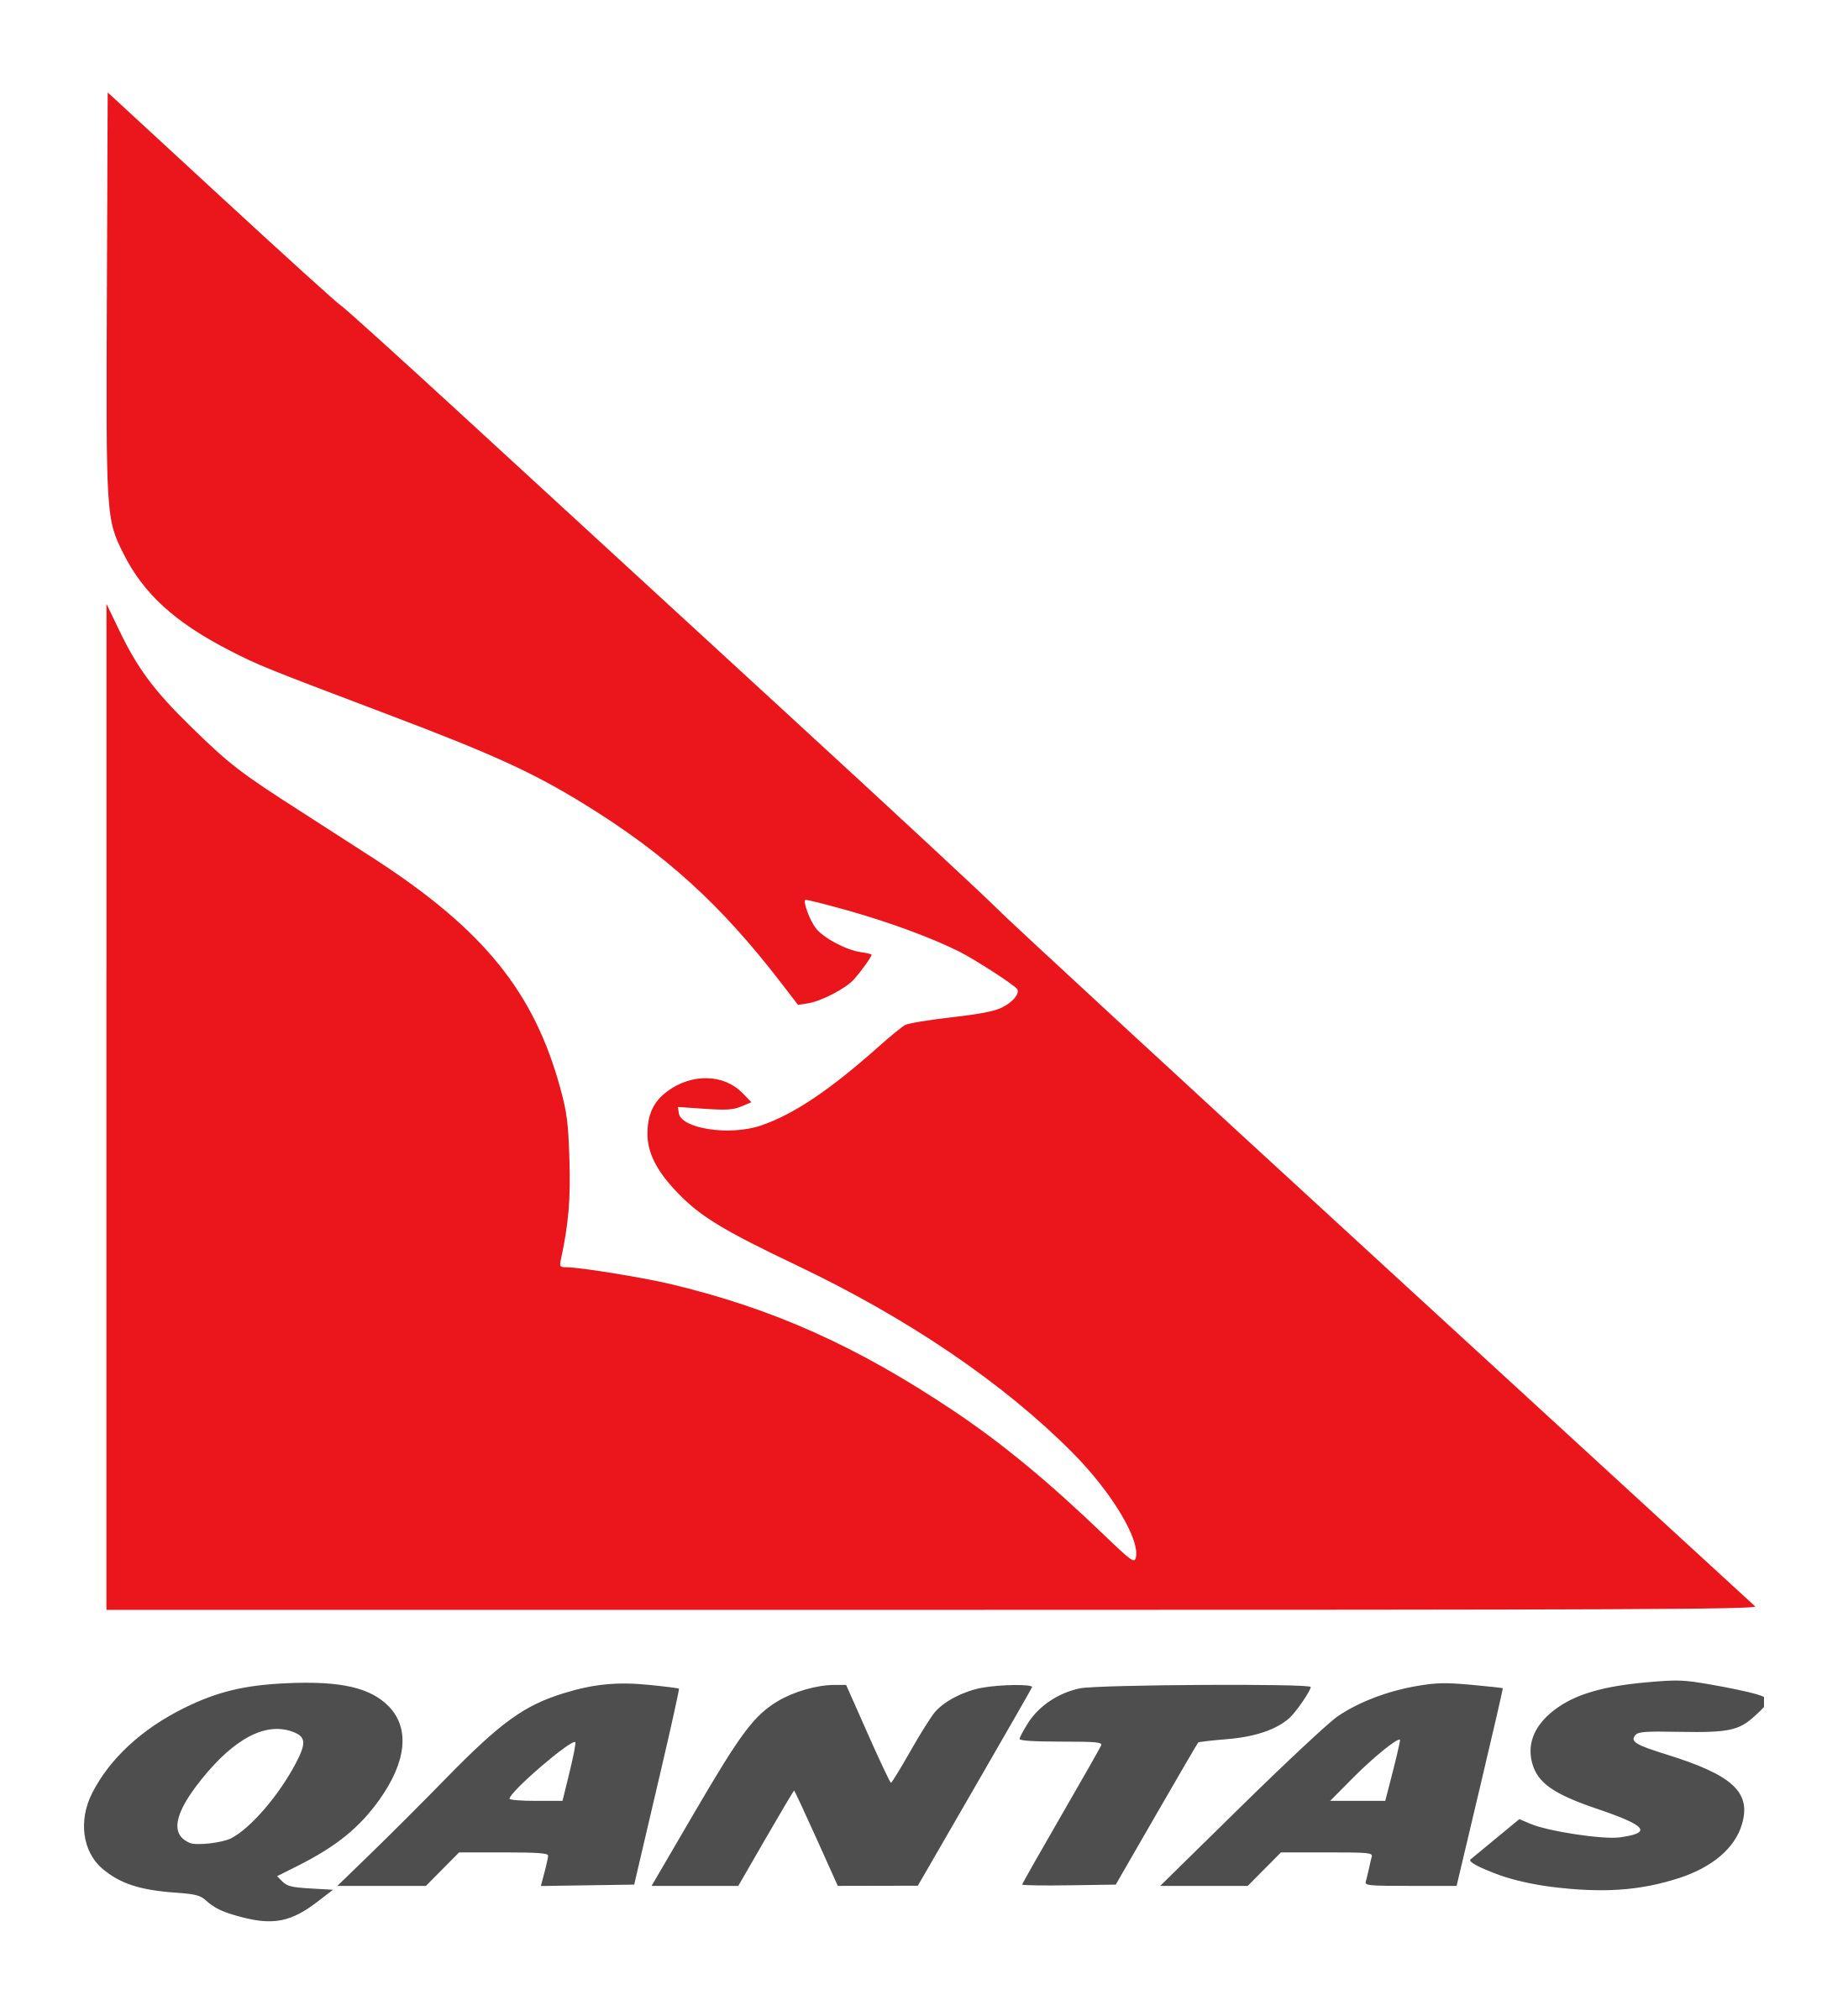 Who Has with a Red Triangle Kangaroo Logo - Qantas Logo, Qantas Symbol, Meaning, History and Evolution